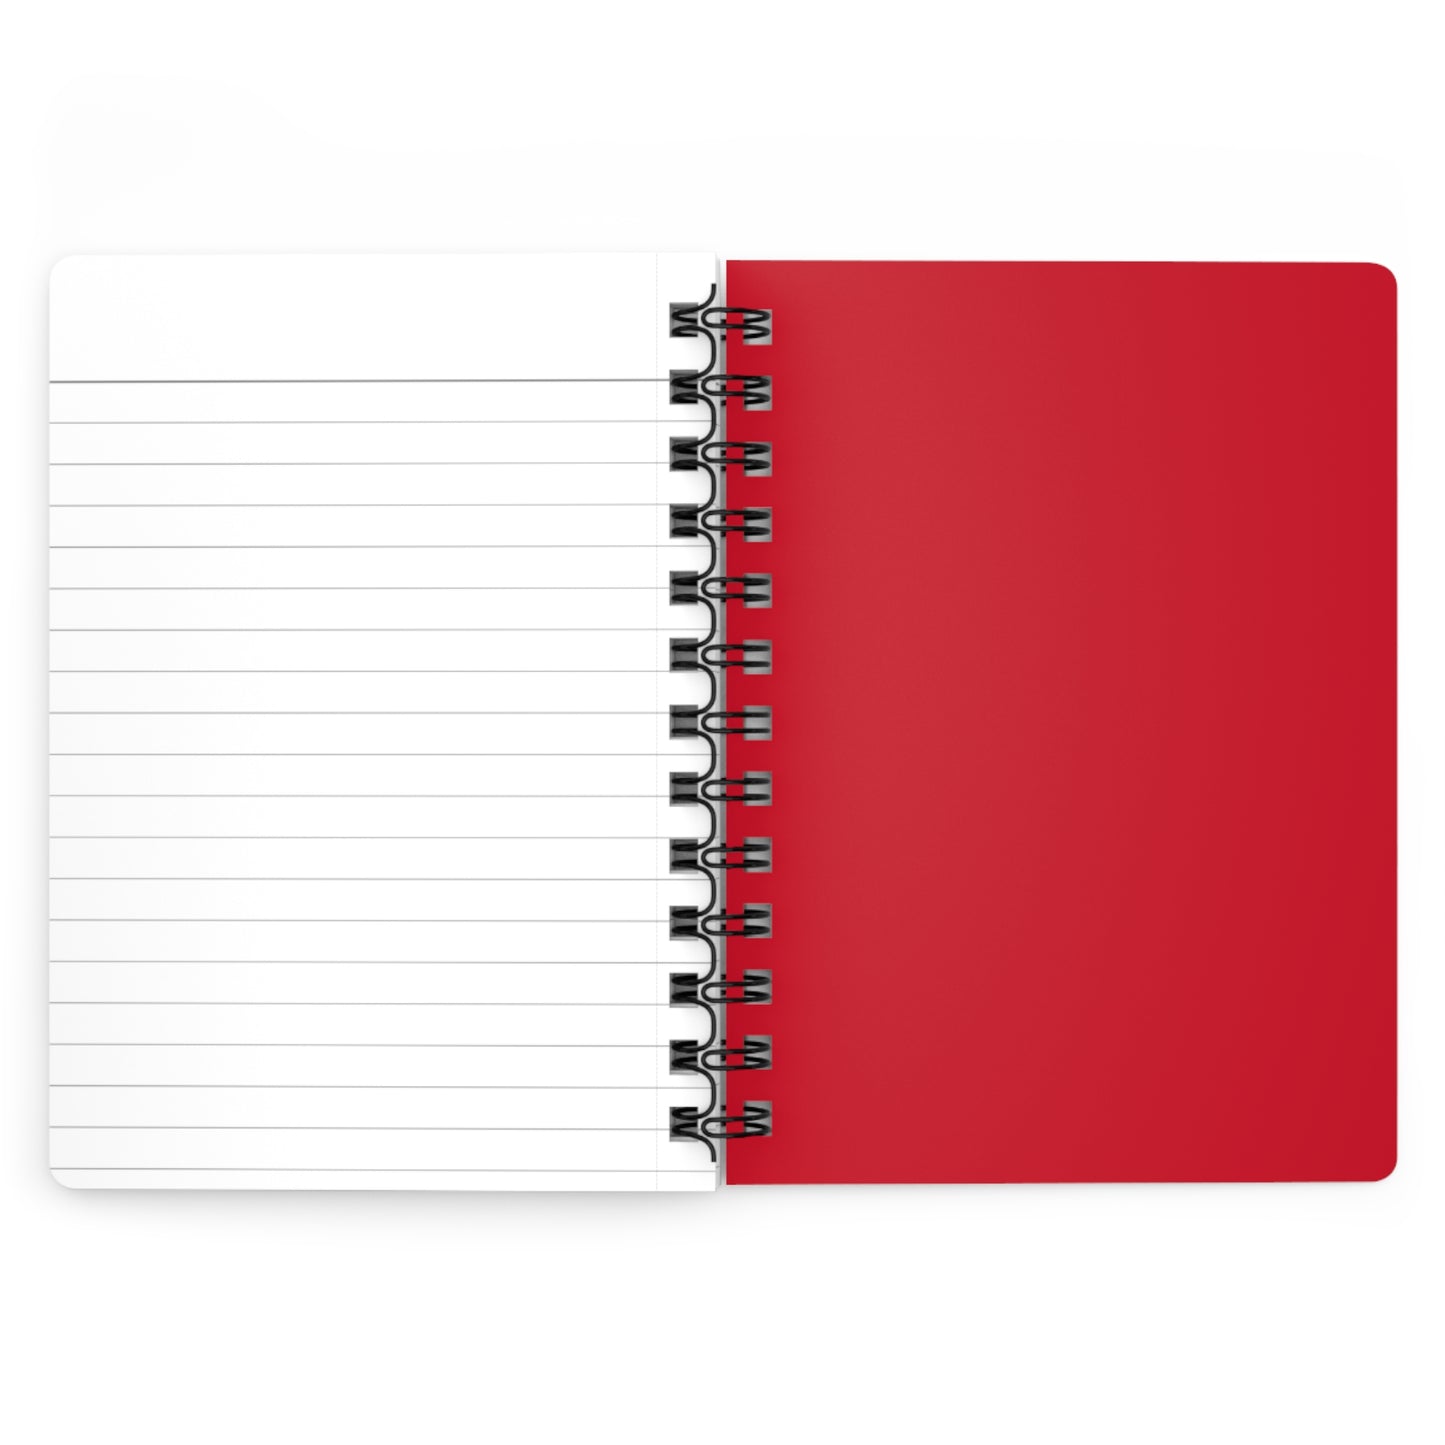 Snowman - Spiral Bound Journal -Red - Holiday Notepad